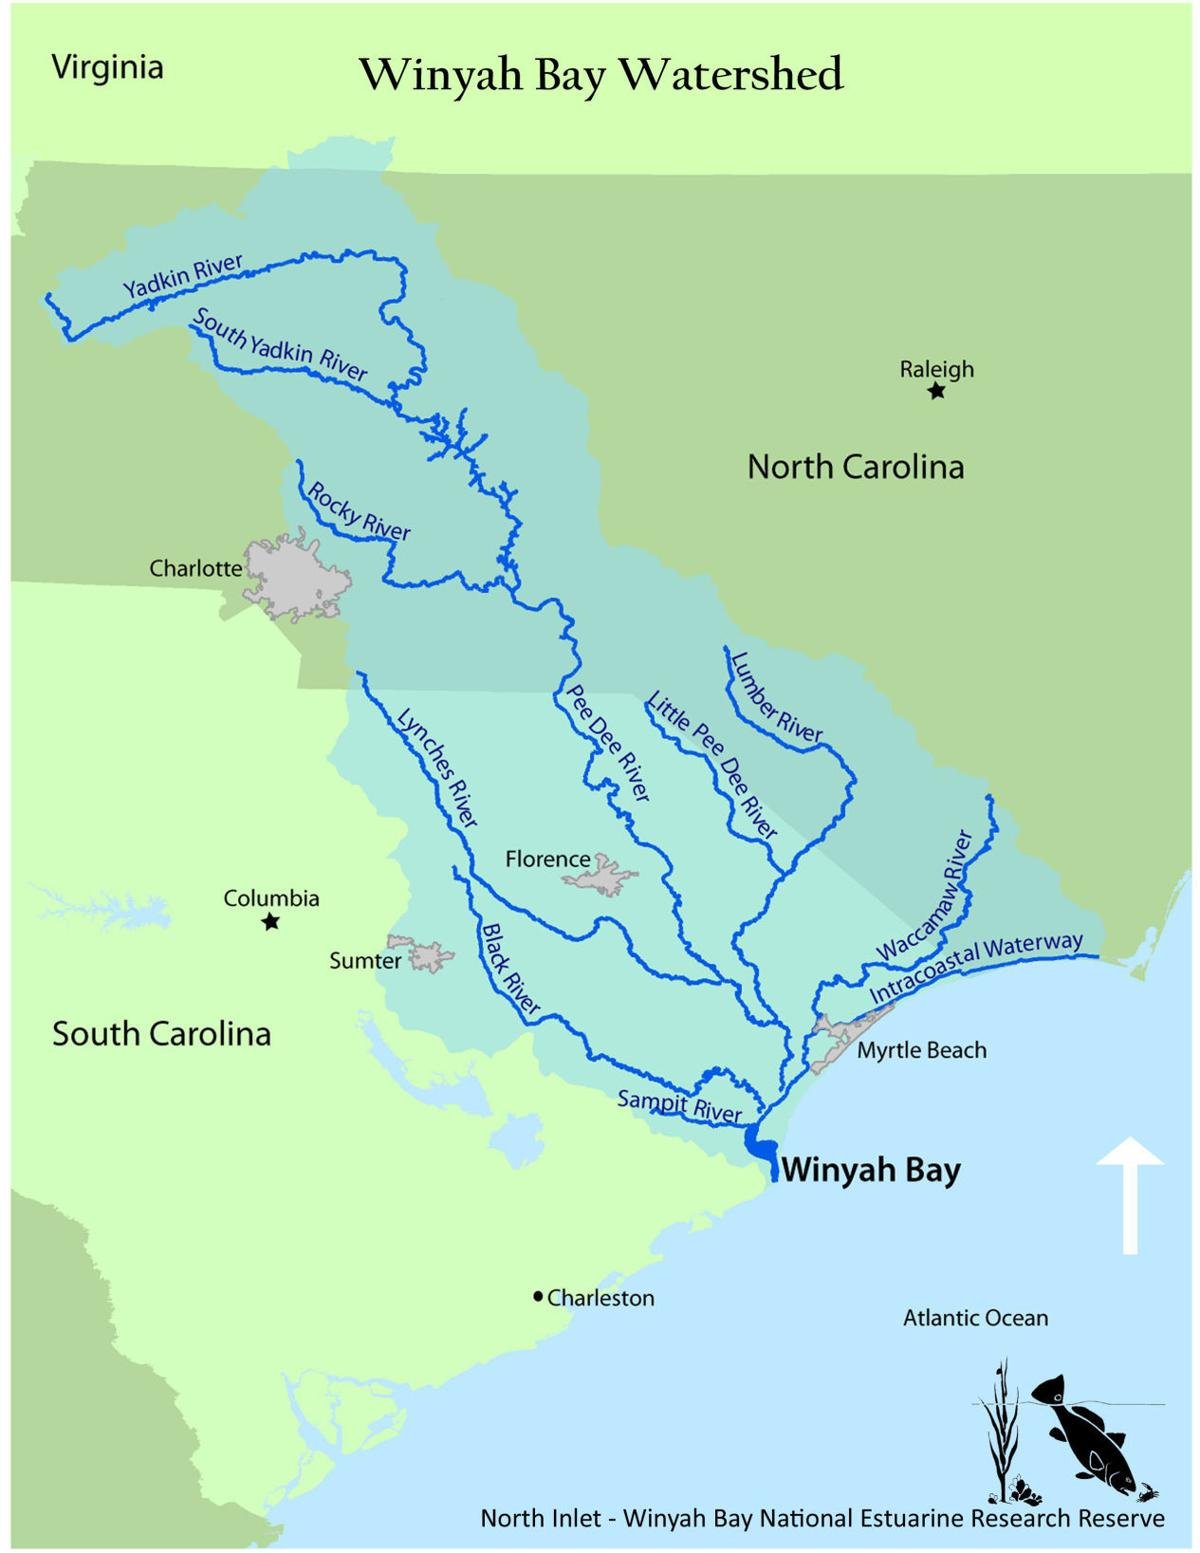 pee dee river map